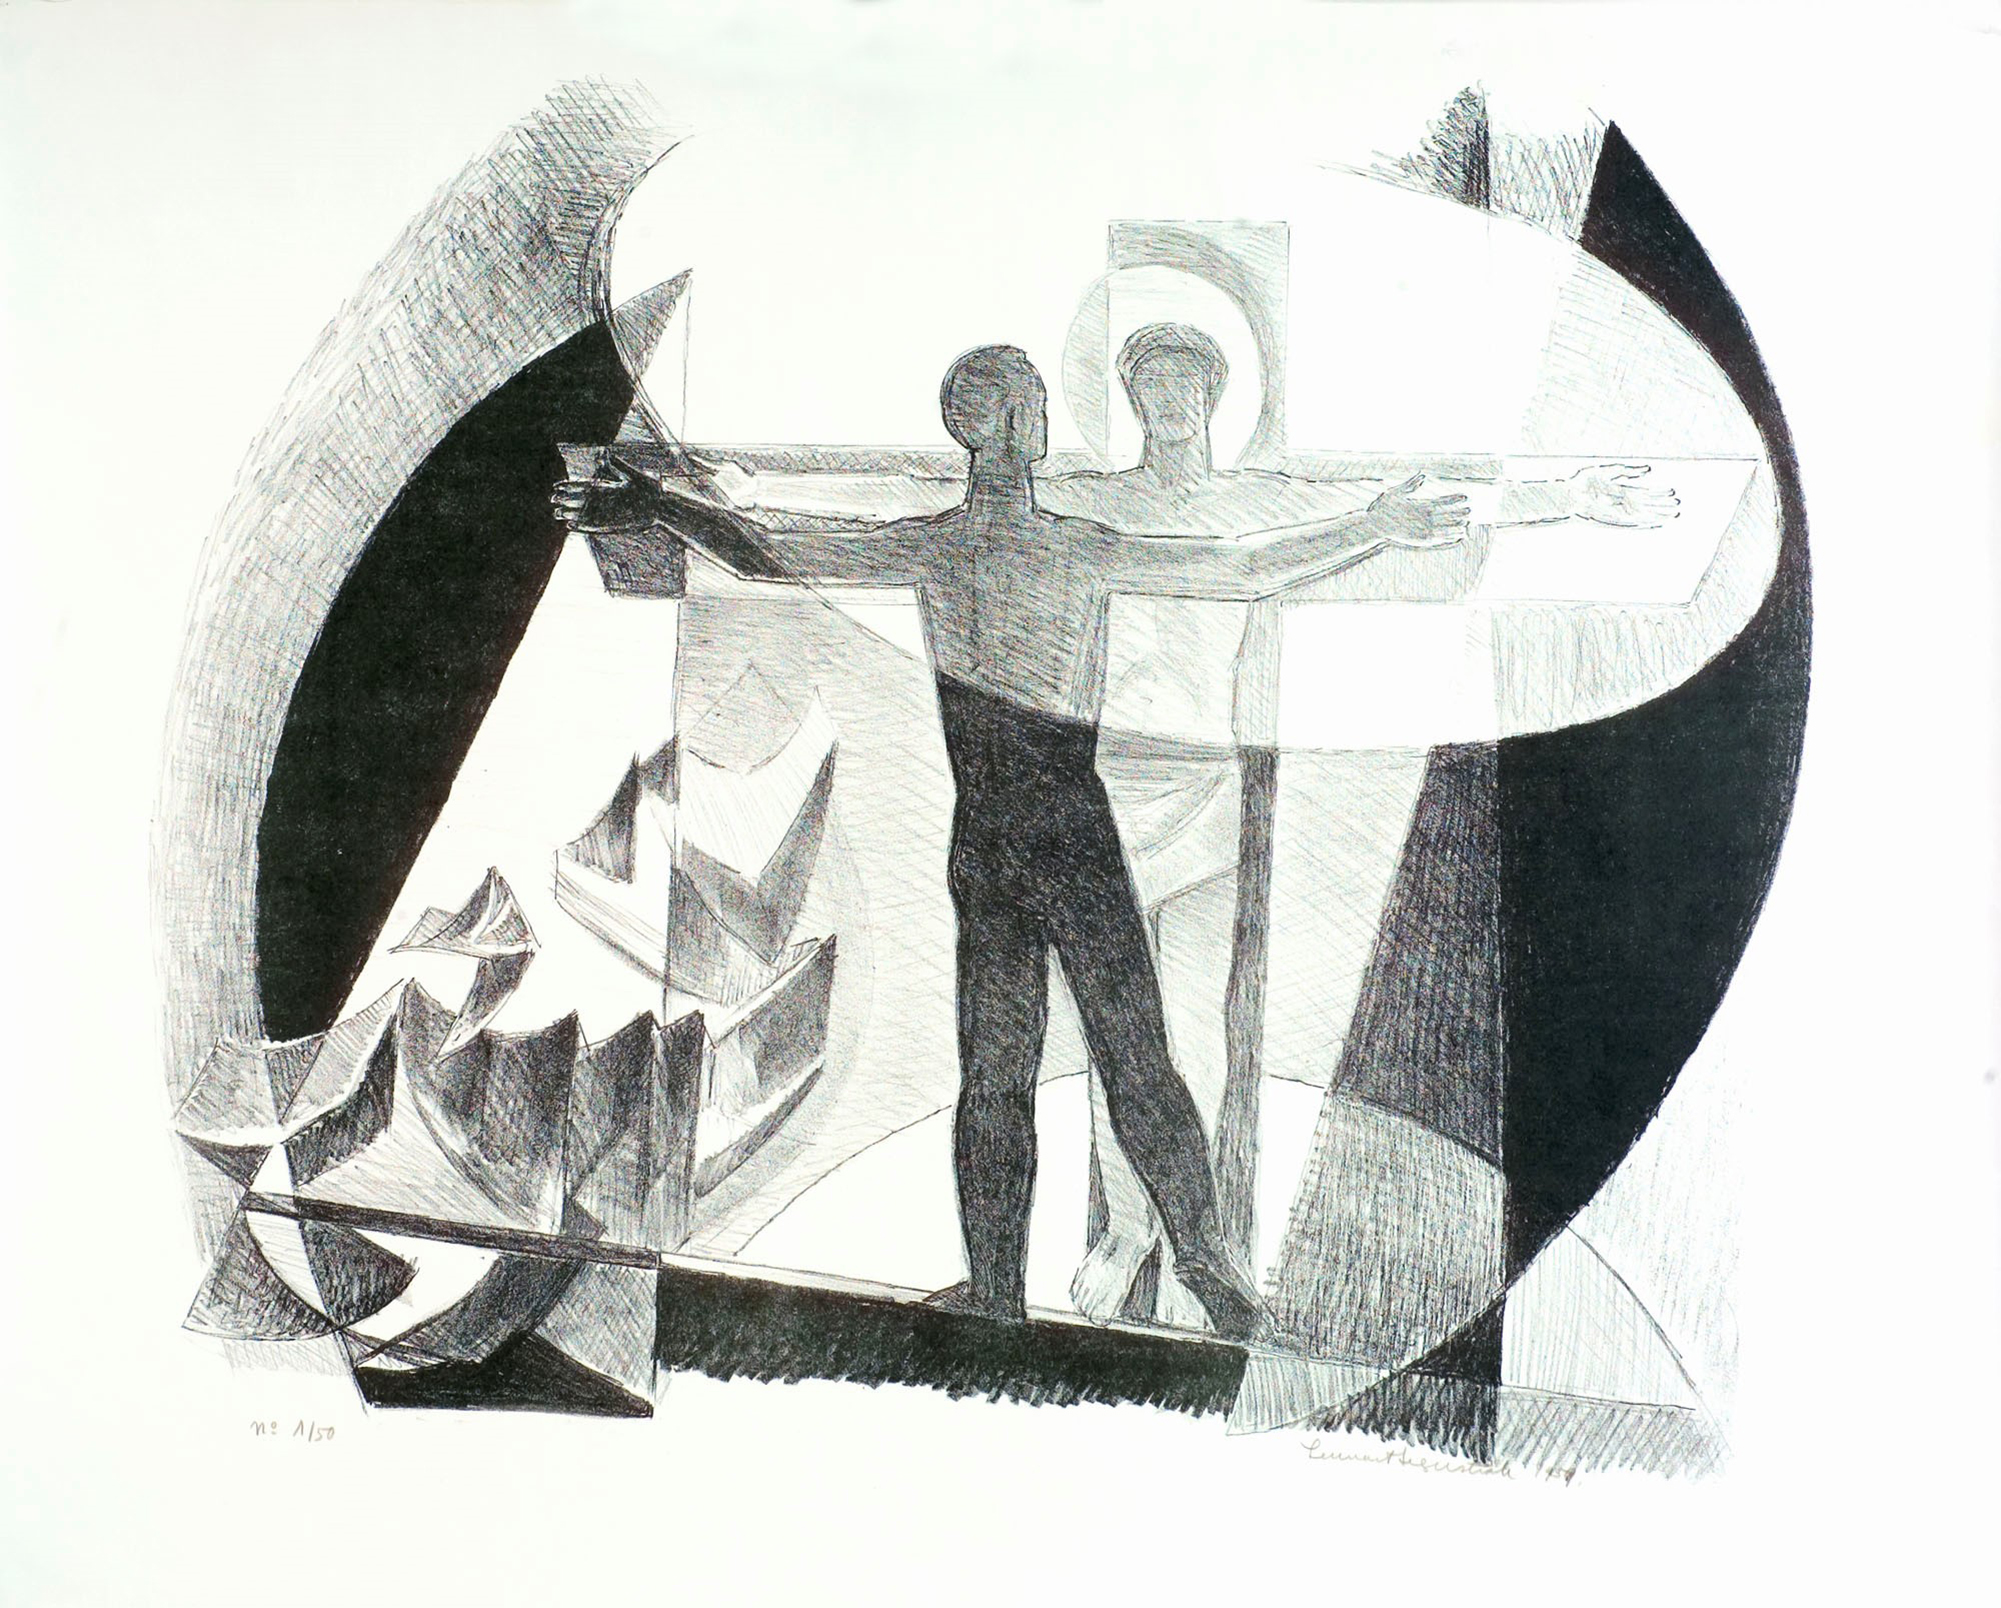 Vapautus -  Befrielsen
litografia/litografi 88 x 60 cm, 1959